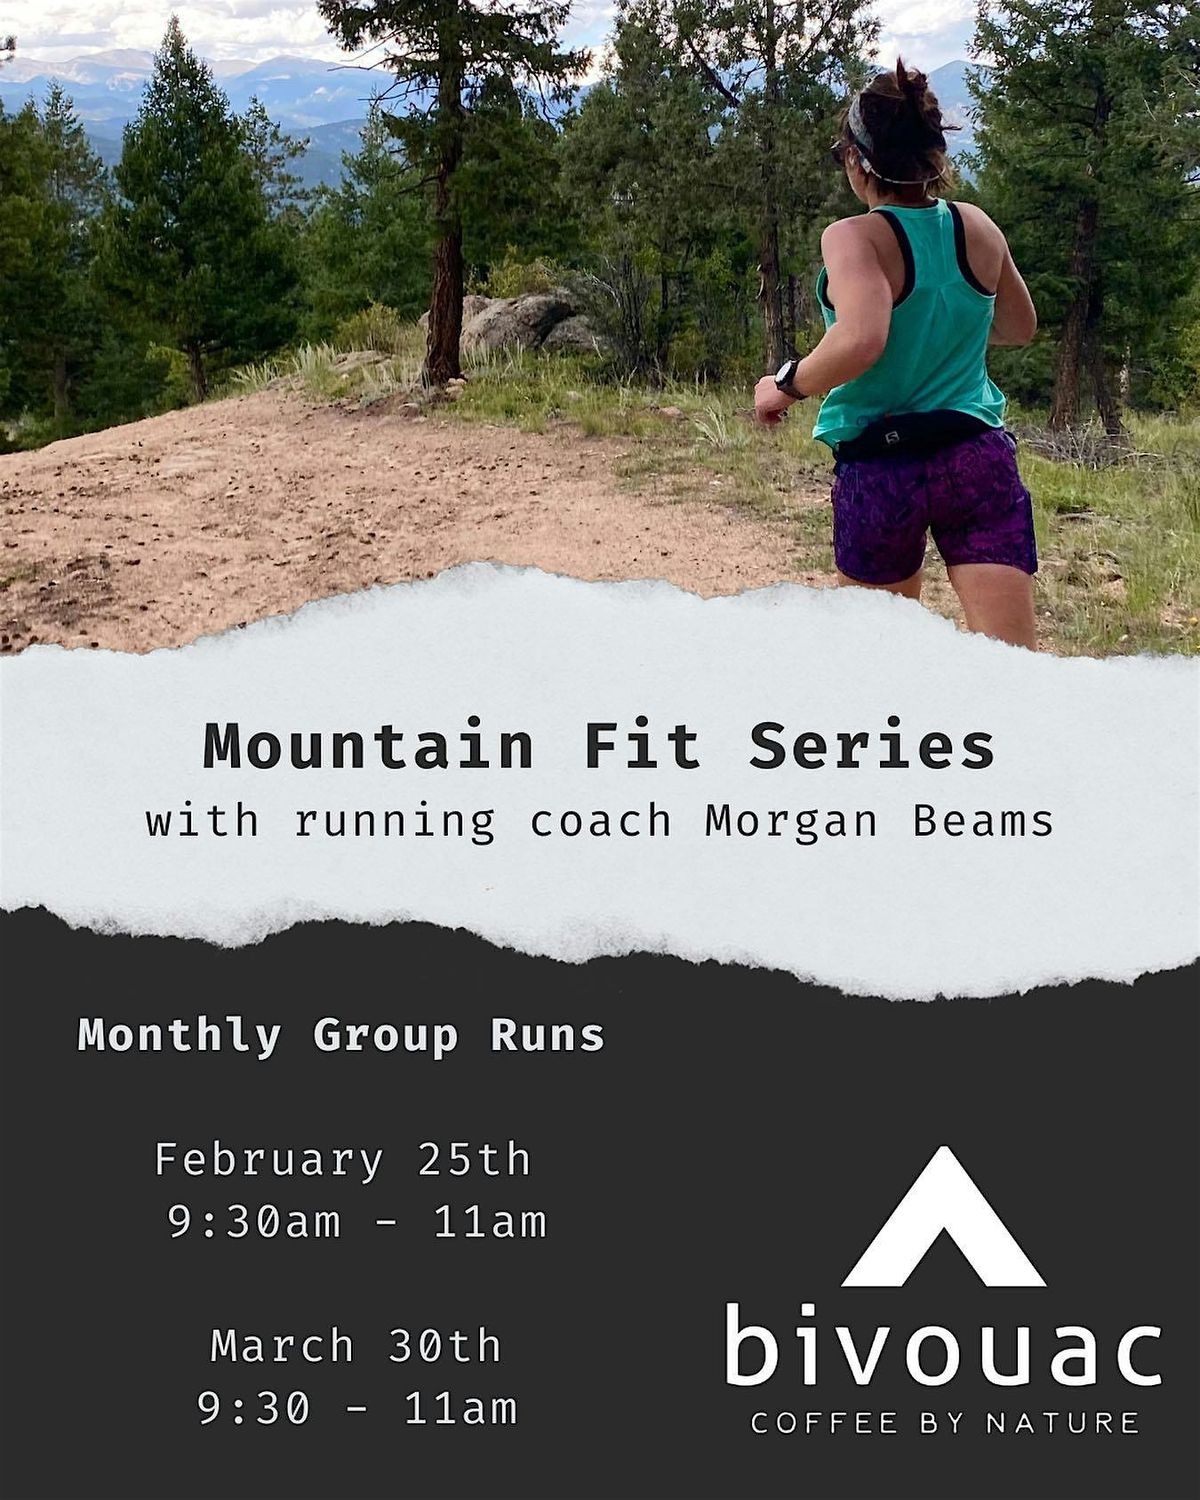 Bivouac Mountain Fit Series